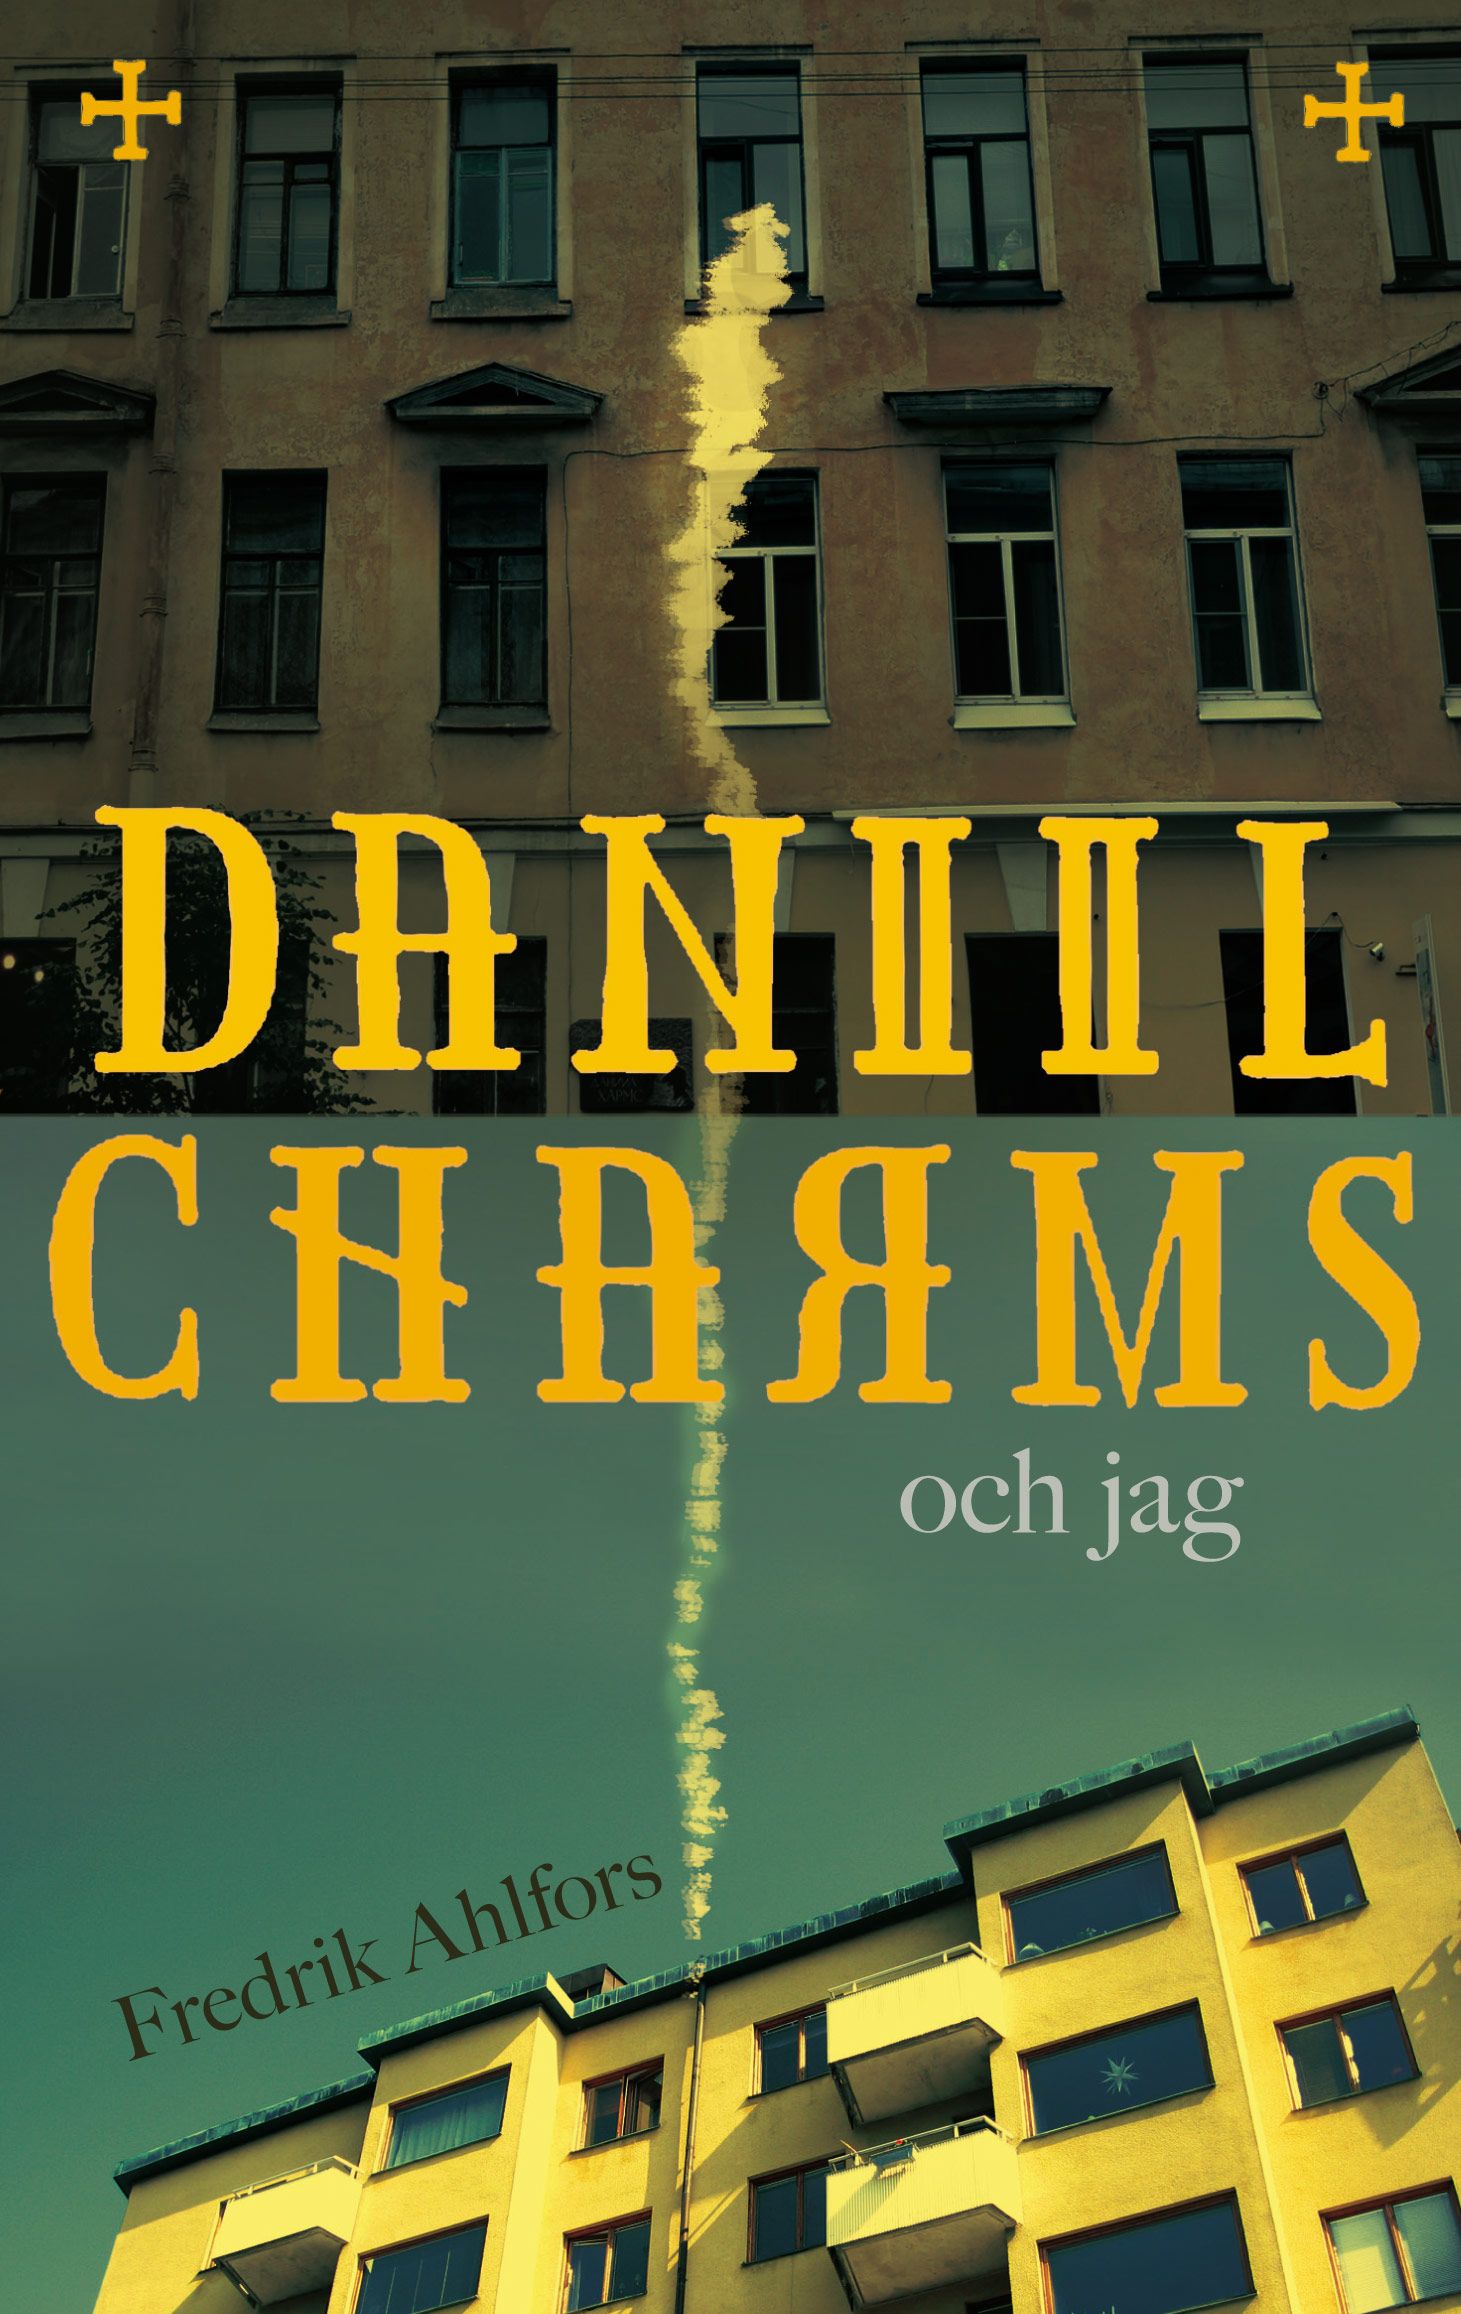 Daniil Charms och jag, e-bog af Fredrik Ahlfors